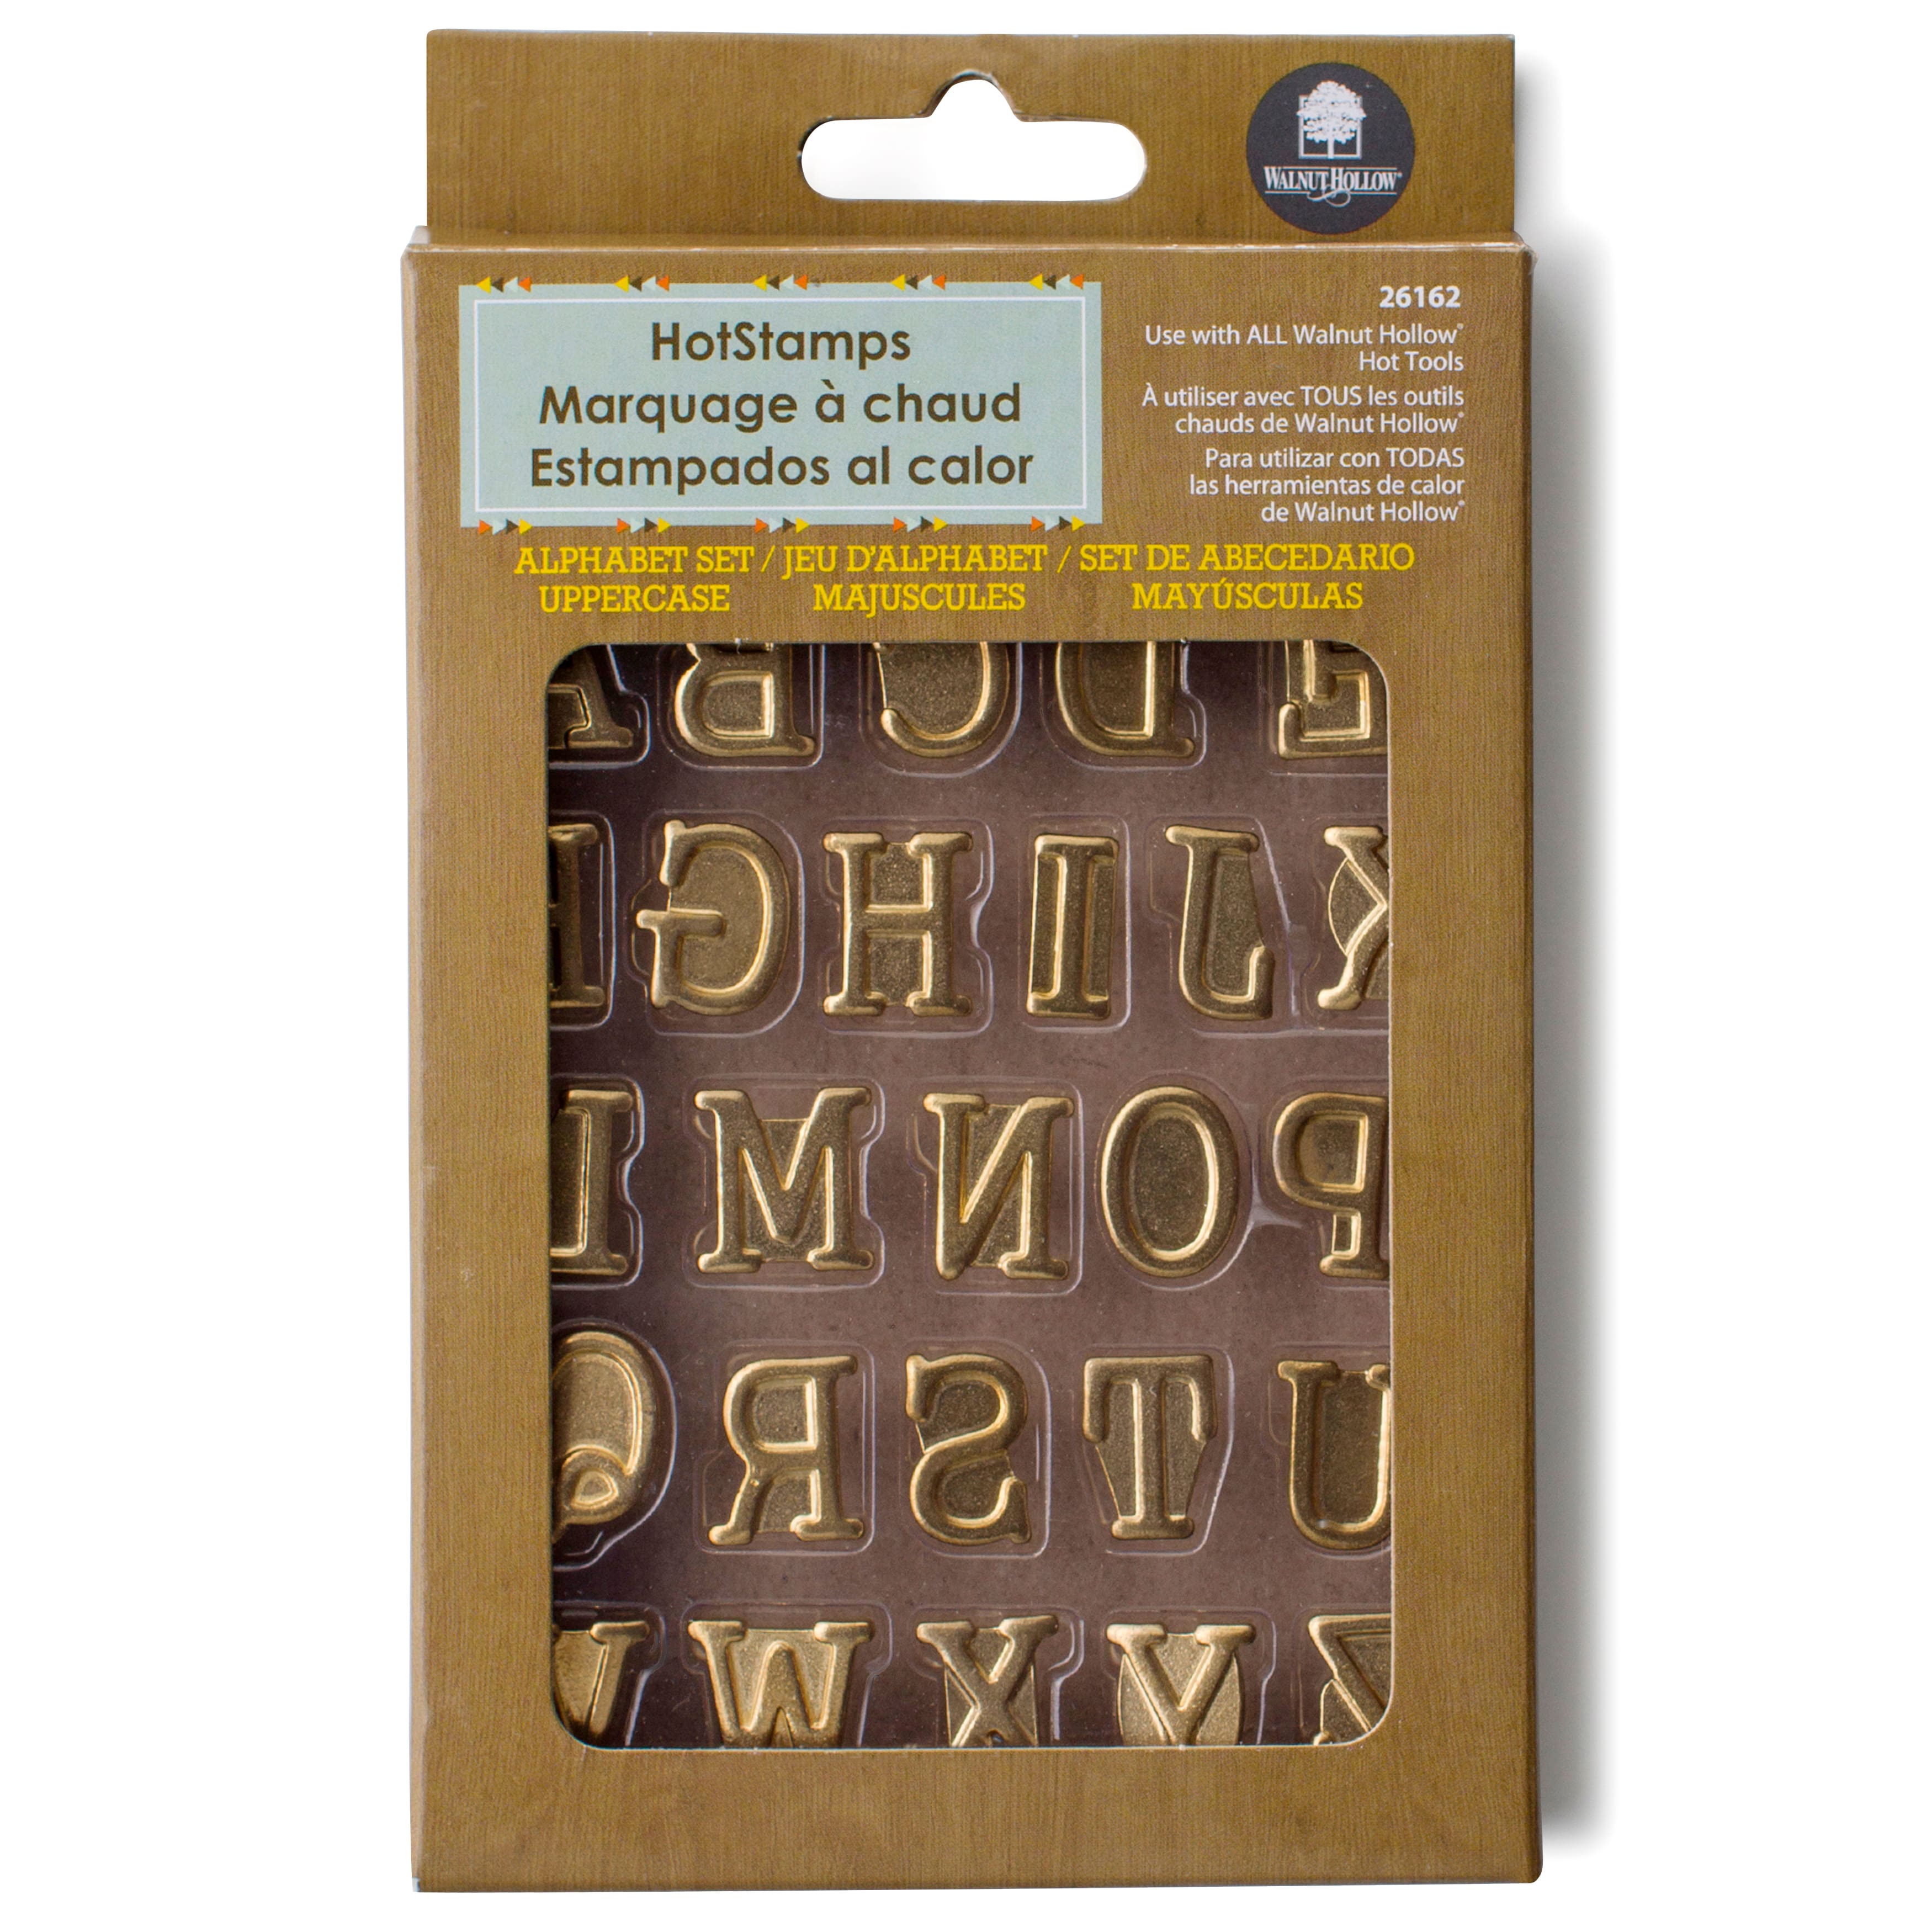 Walnut Hollow Hotstamps Alphabet Set Uppercase 26162 NEW 